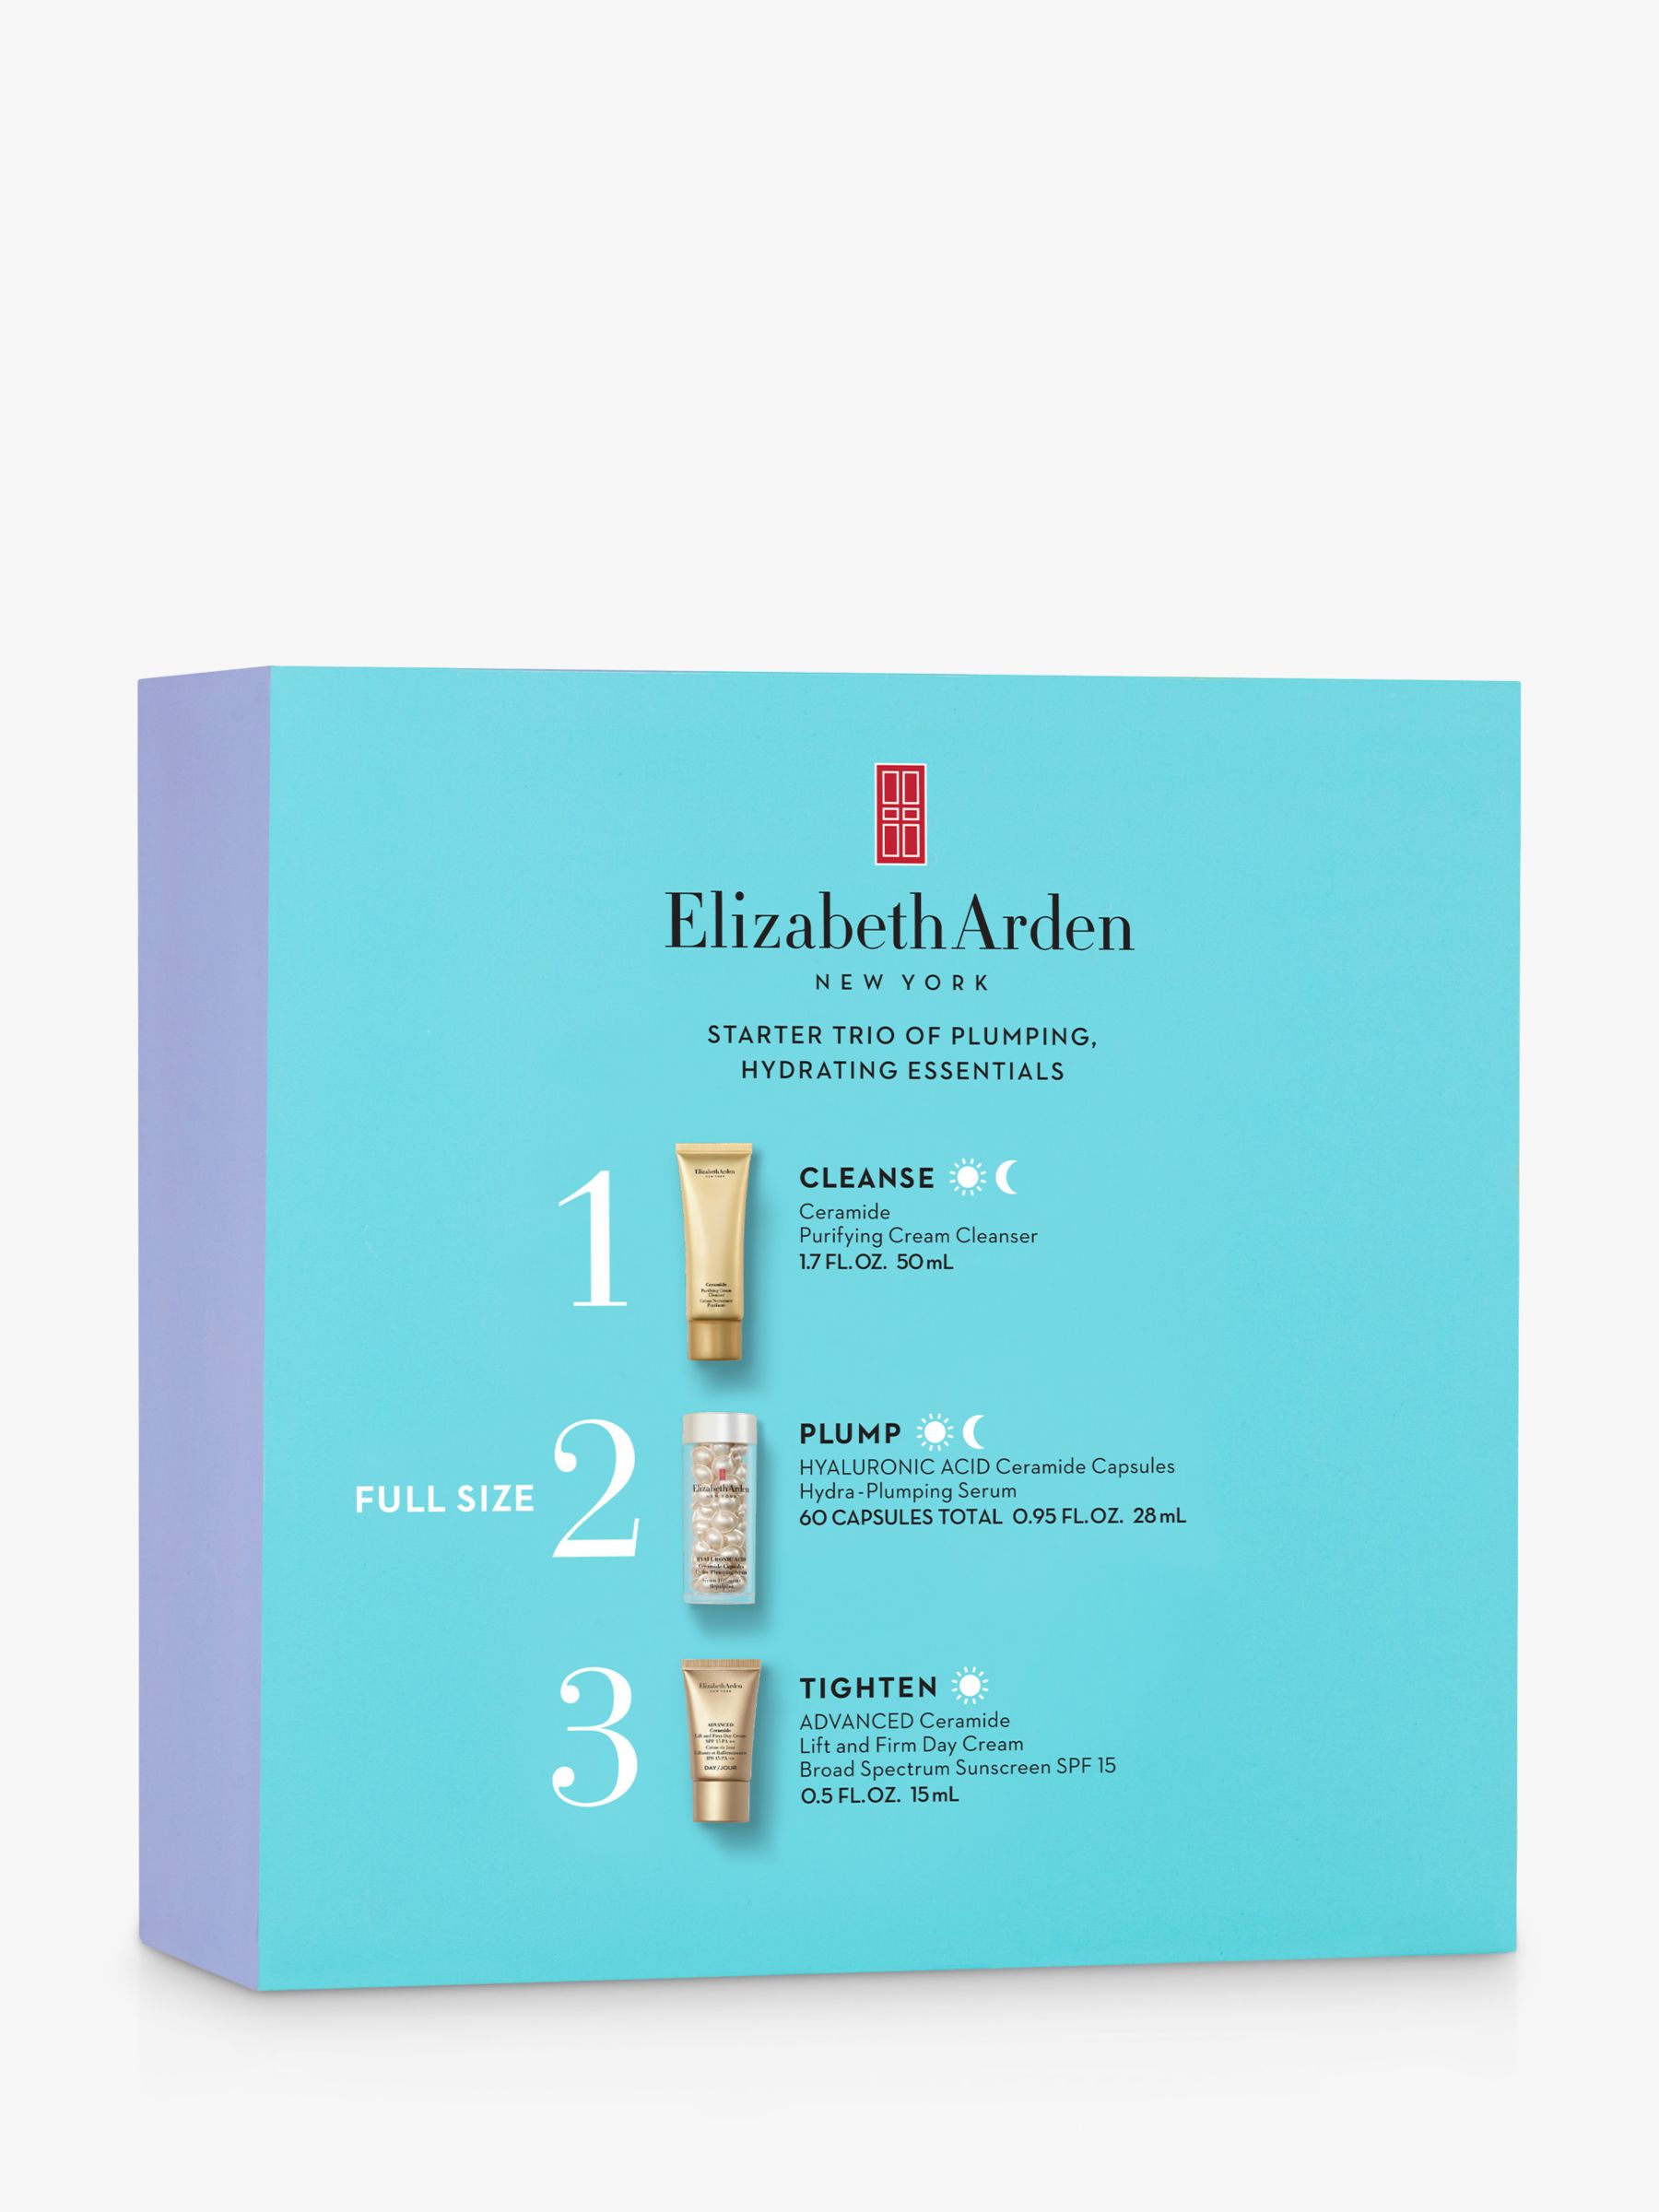 Elizabeth Arden Plumping Hydration Skincare Gift Set 2